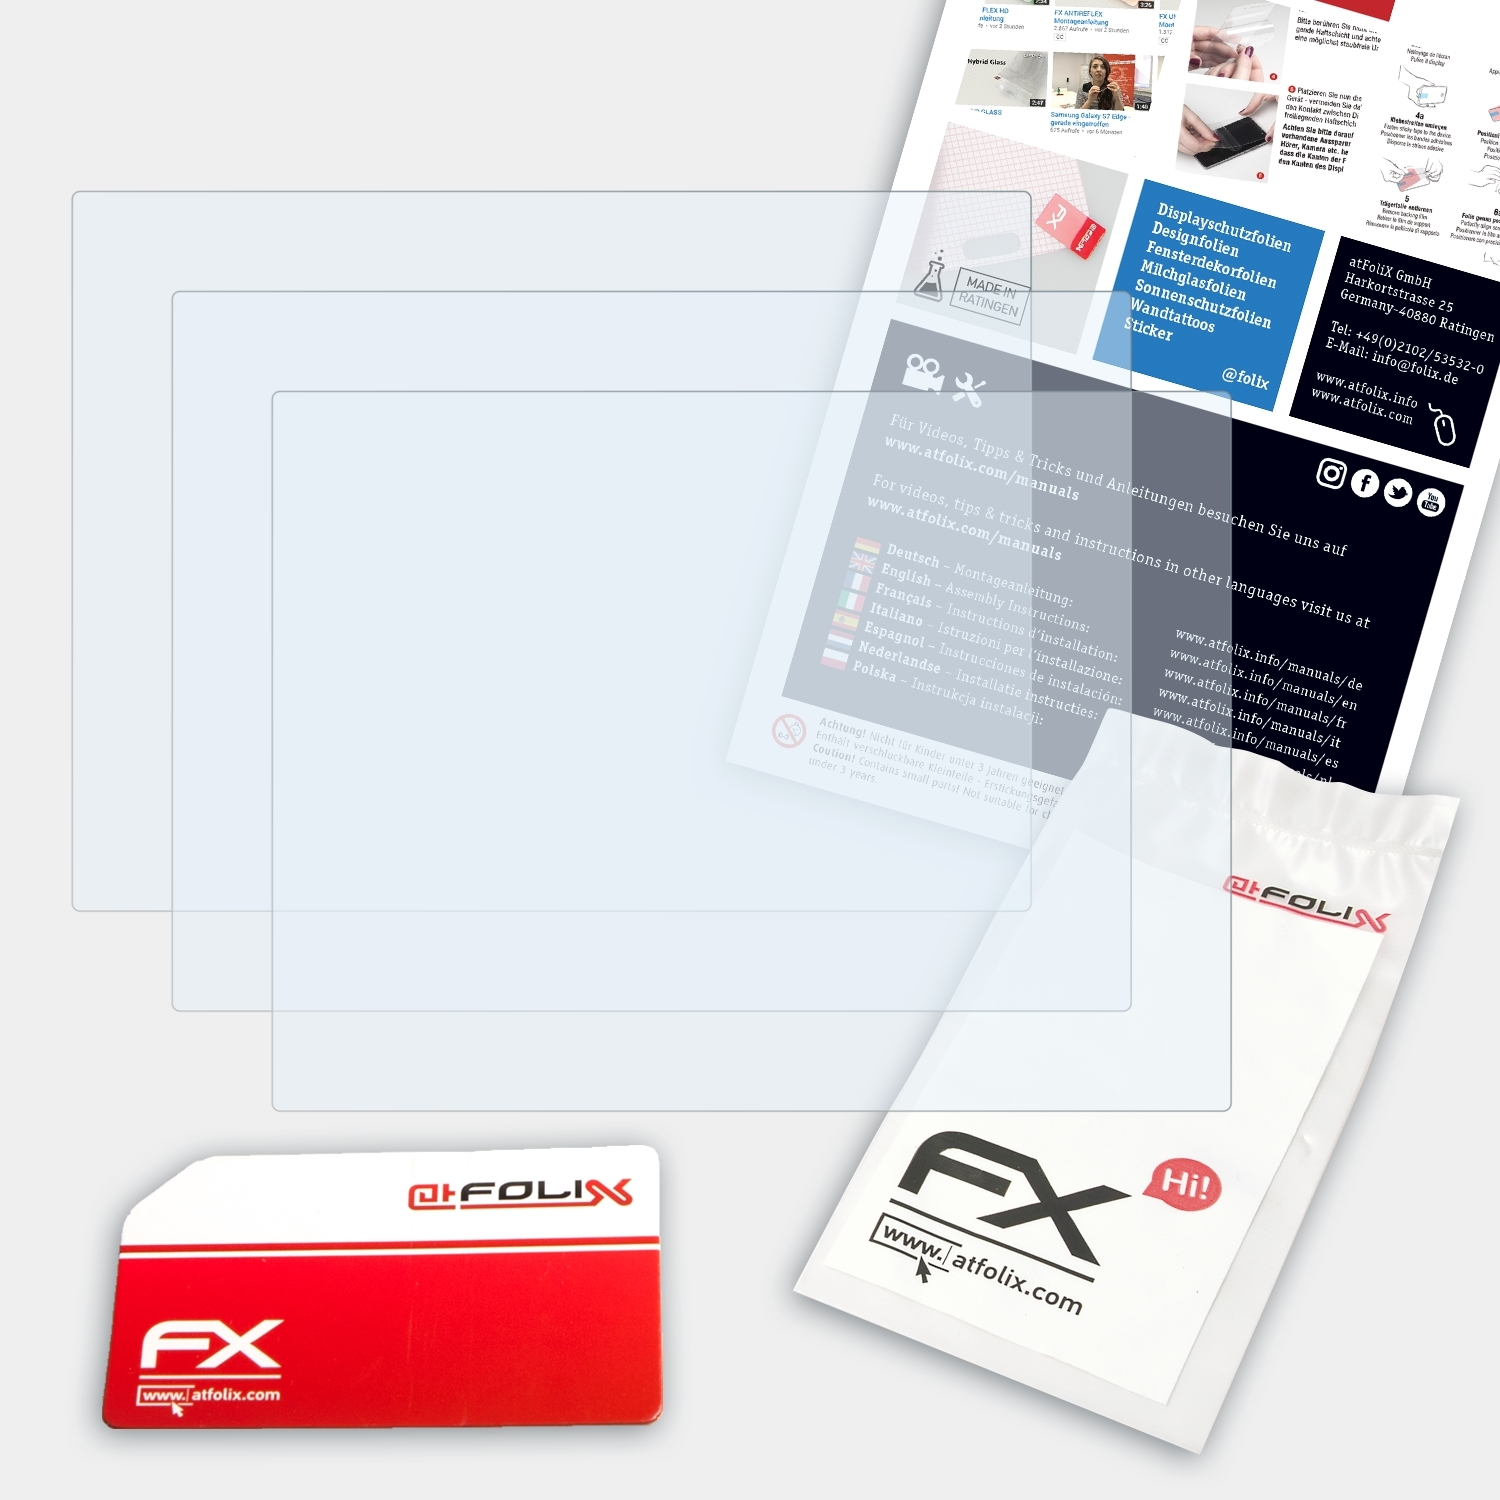 Fujifilm ATFOLIX X-Pro1) Displayschutz(für 3x FX-Clear